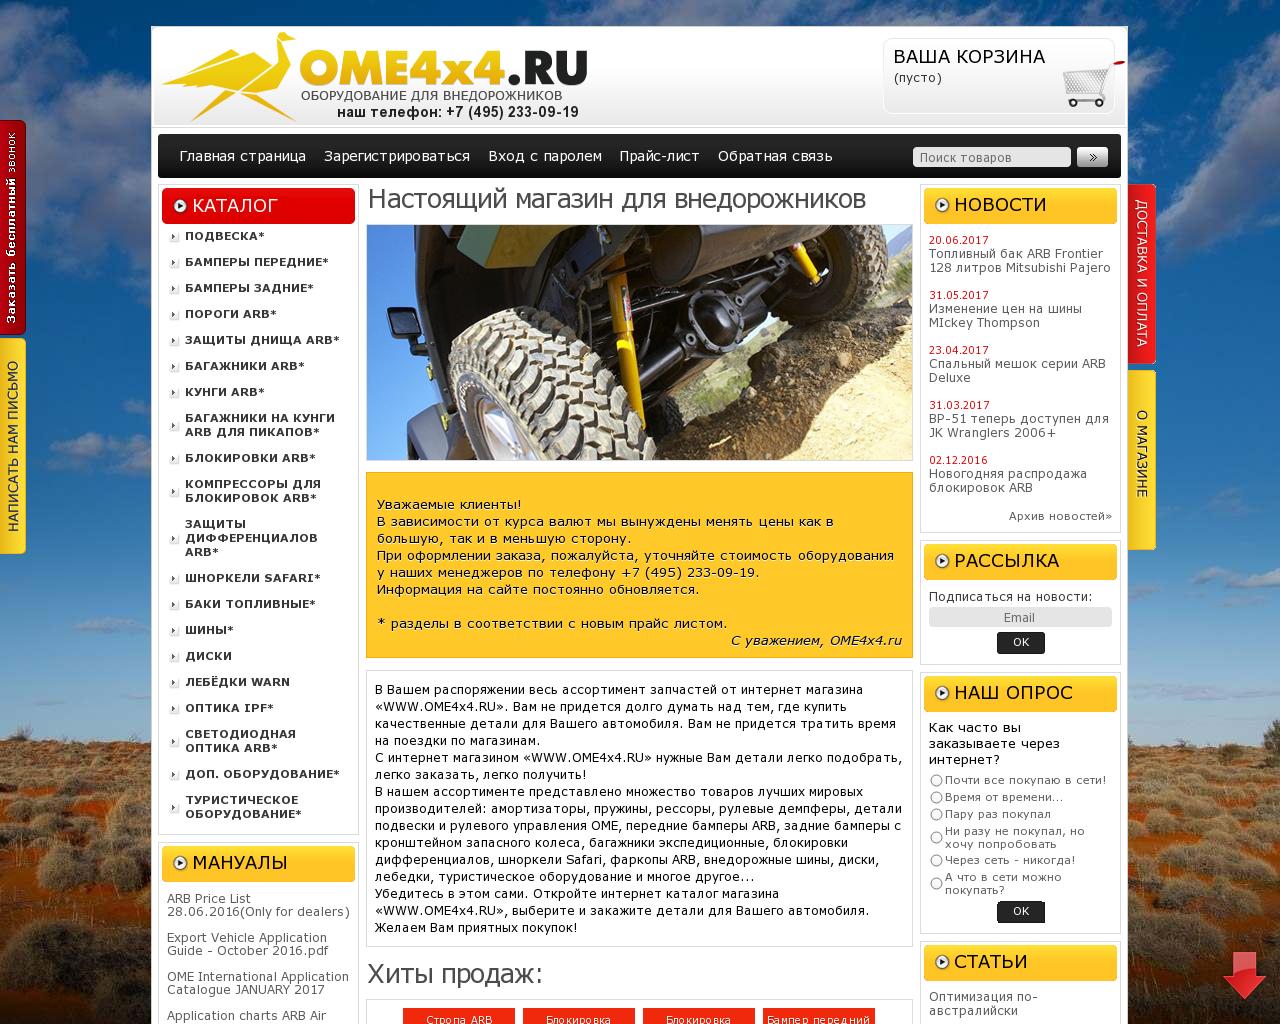 Изображение сайта ome4x4.ru в разрешении 1280x1024